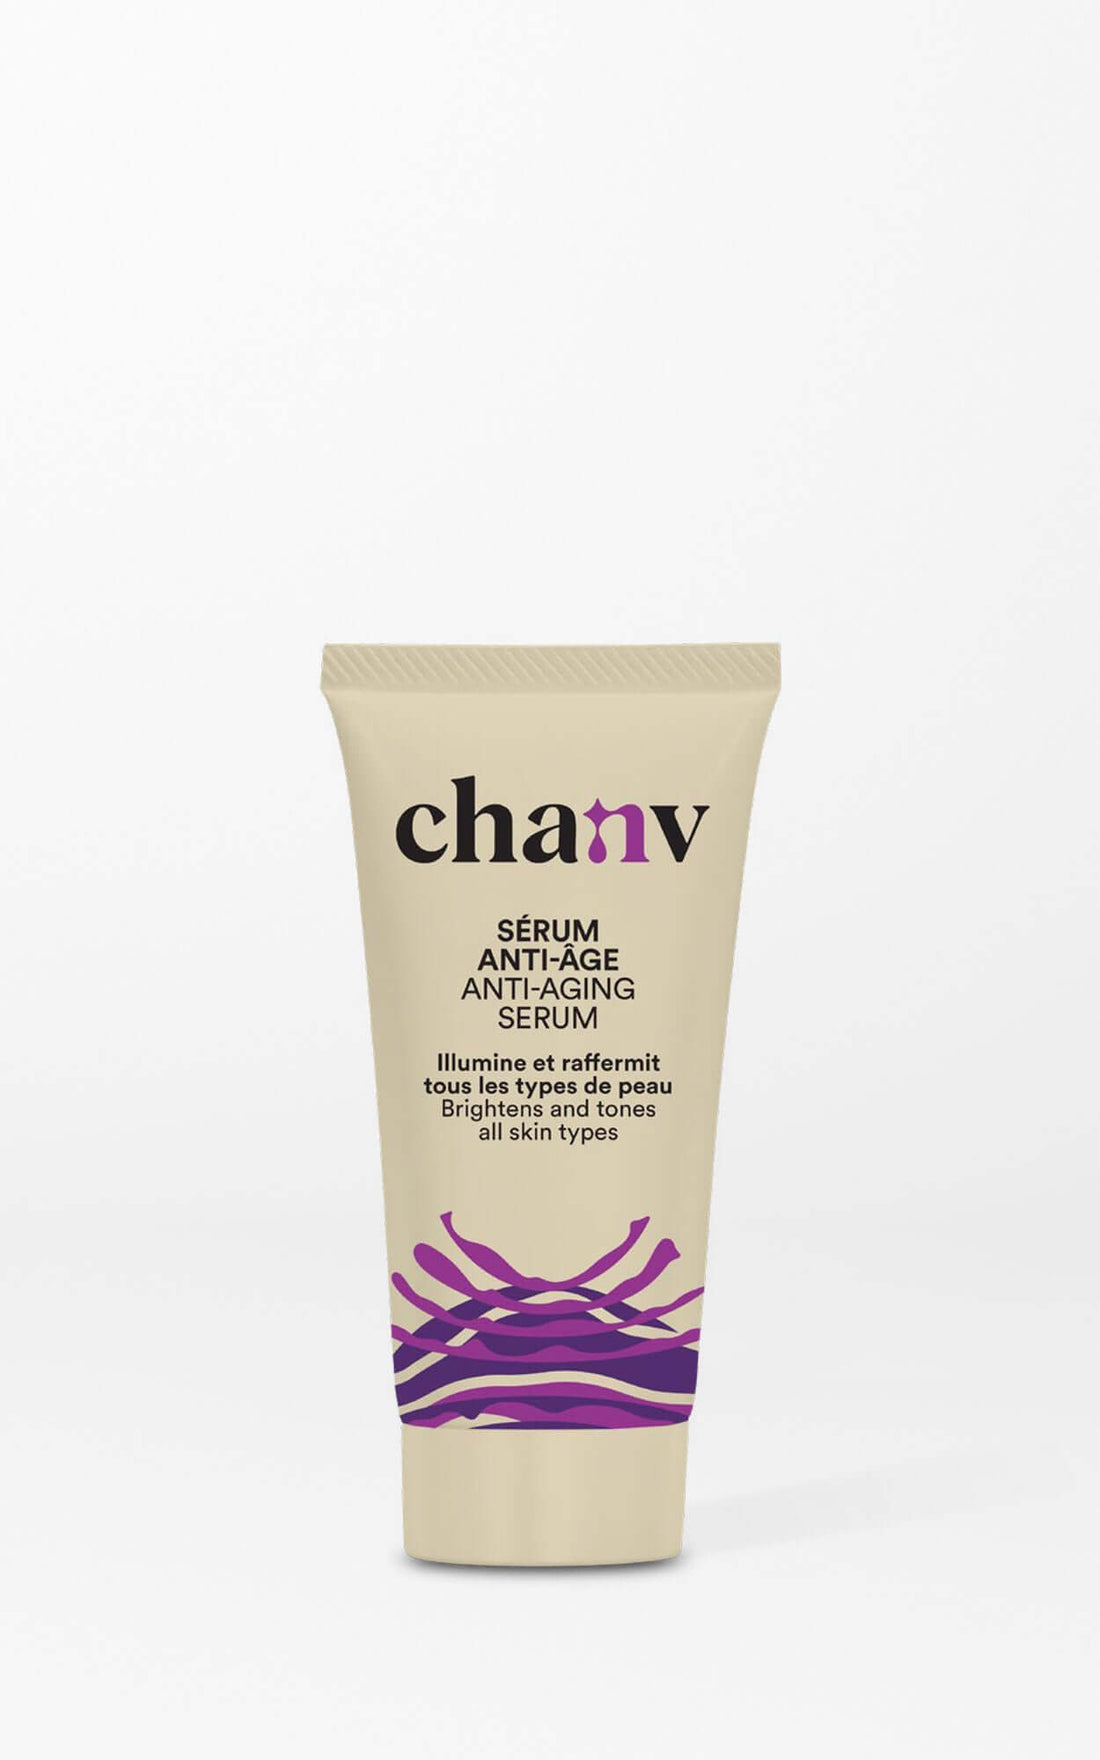 Chanv | Anti-Aging Serum Sample